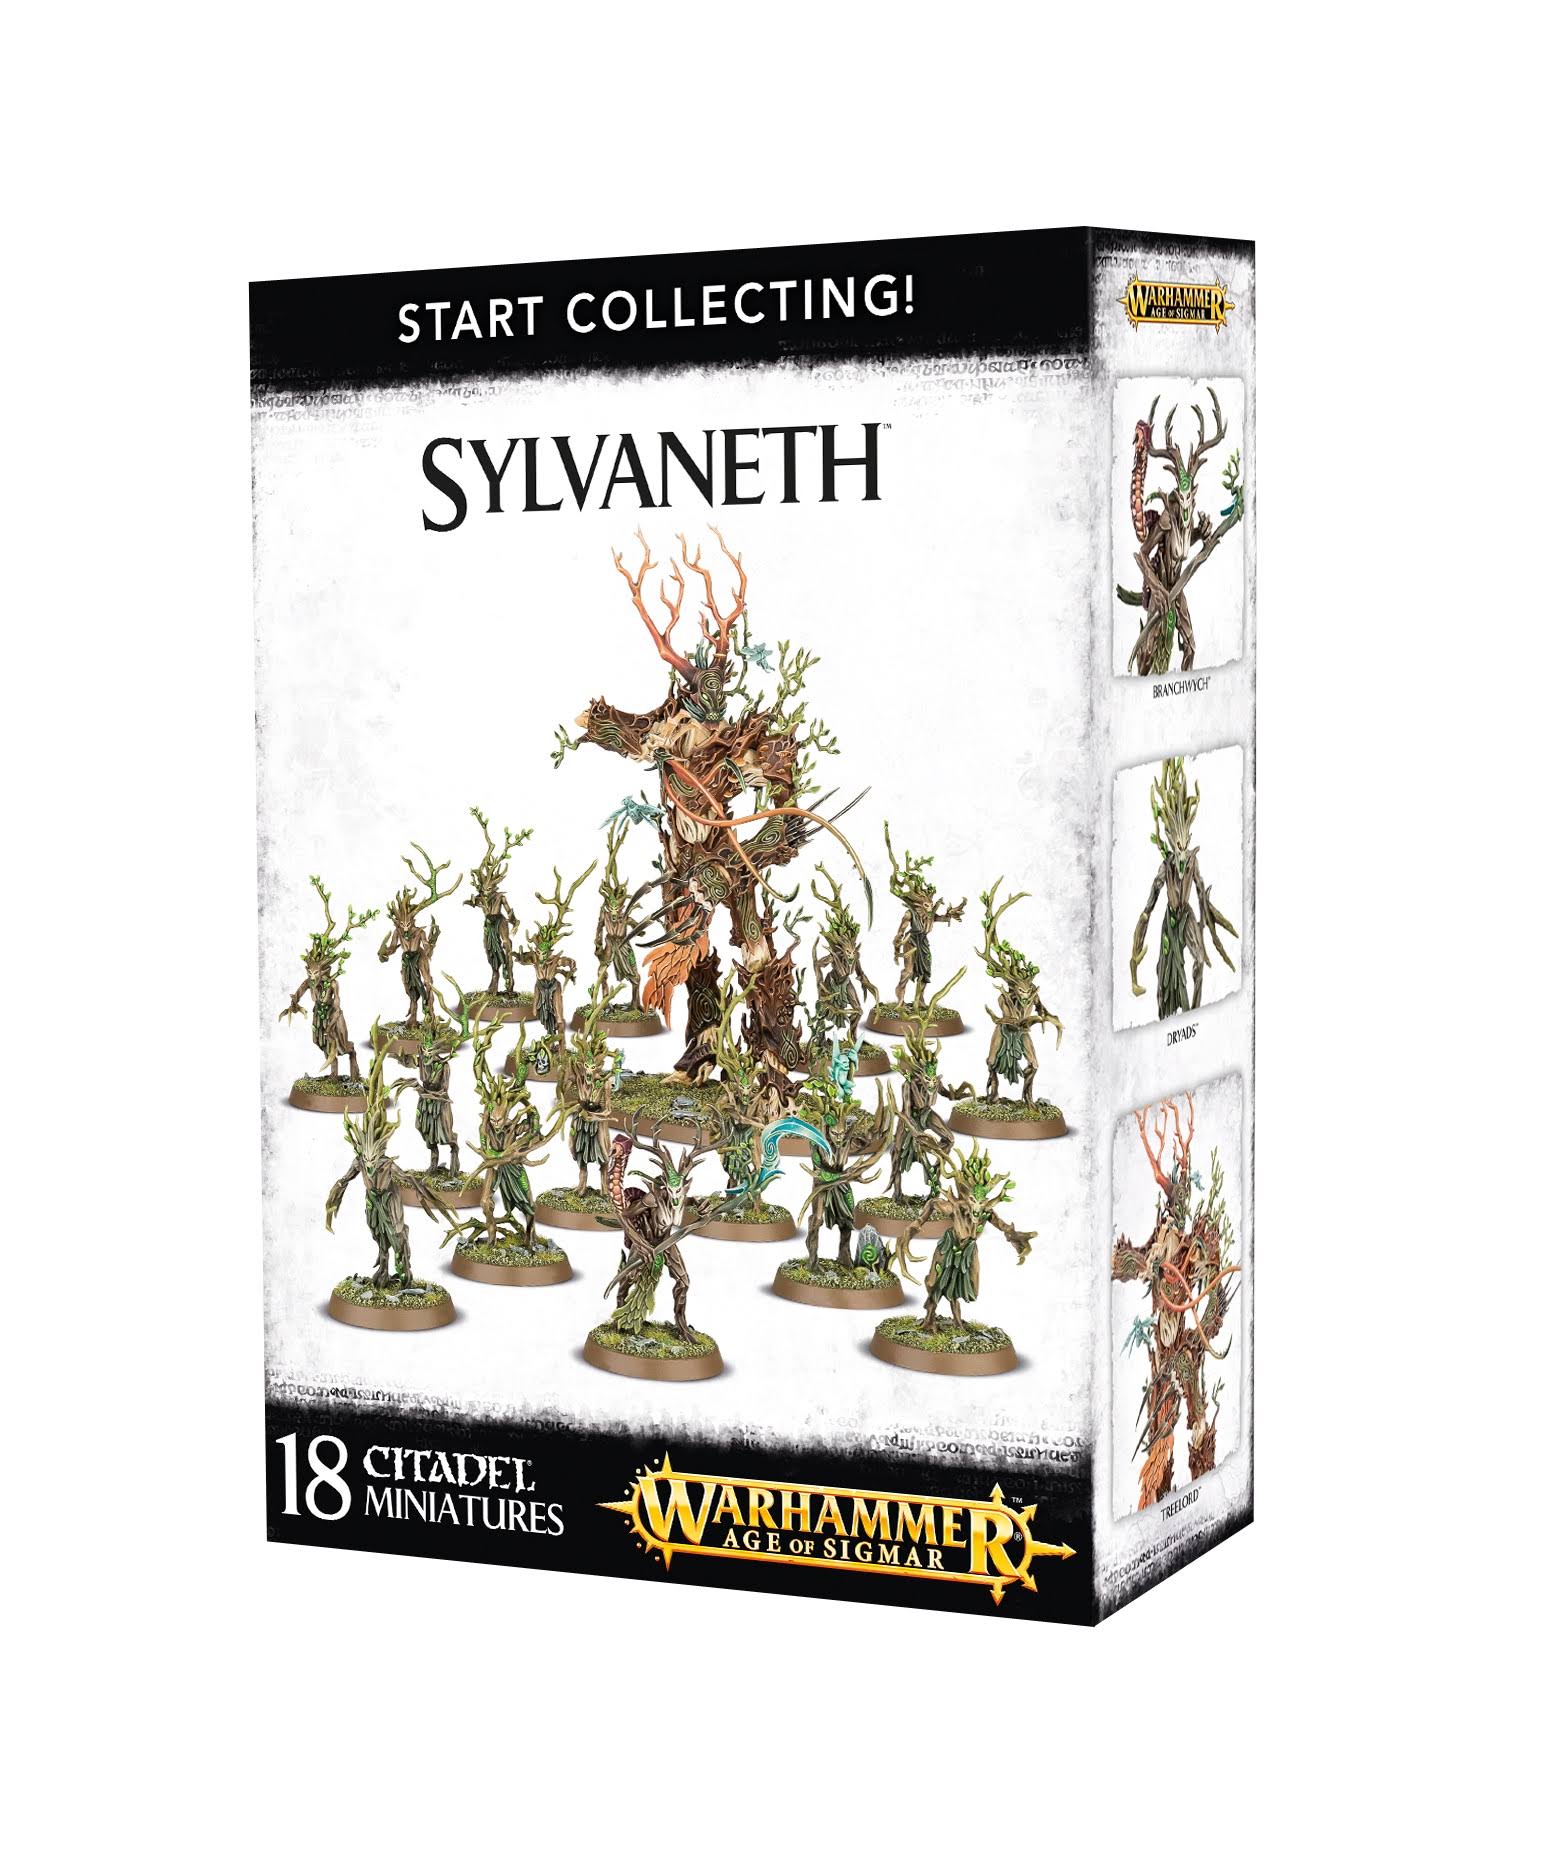 Warhammer Age of Sigmar Sylvaneth Citadel Miniatures - 18 Pieces